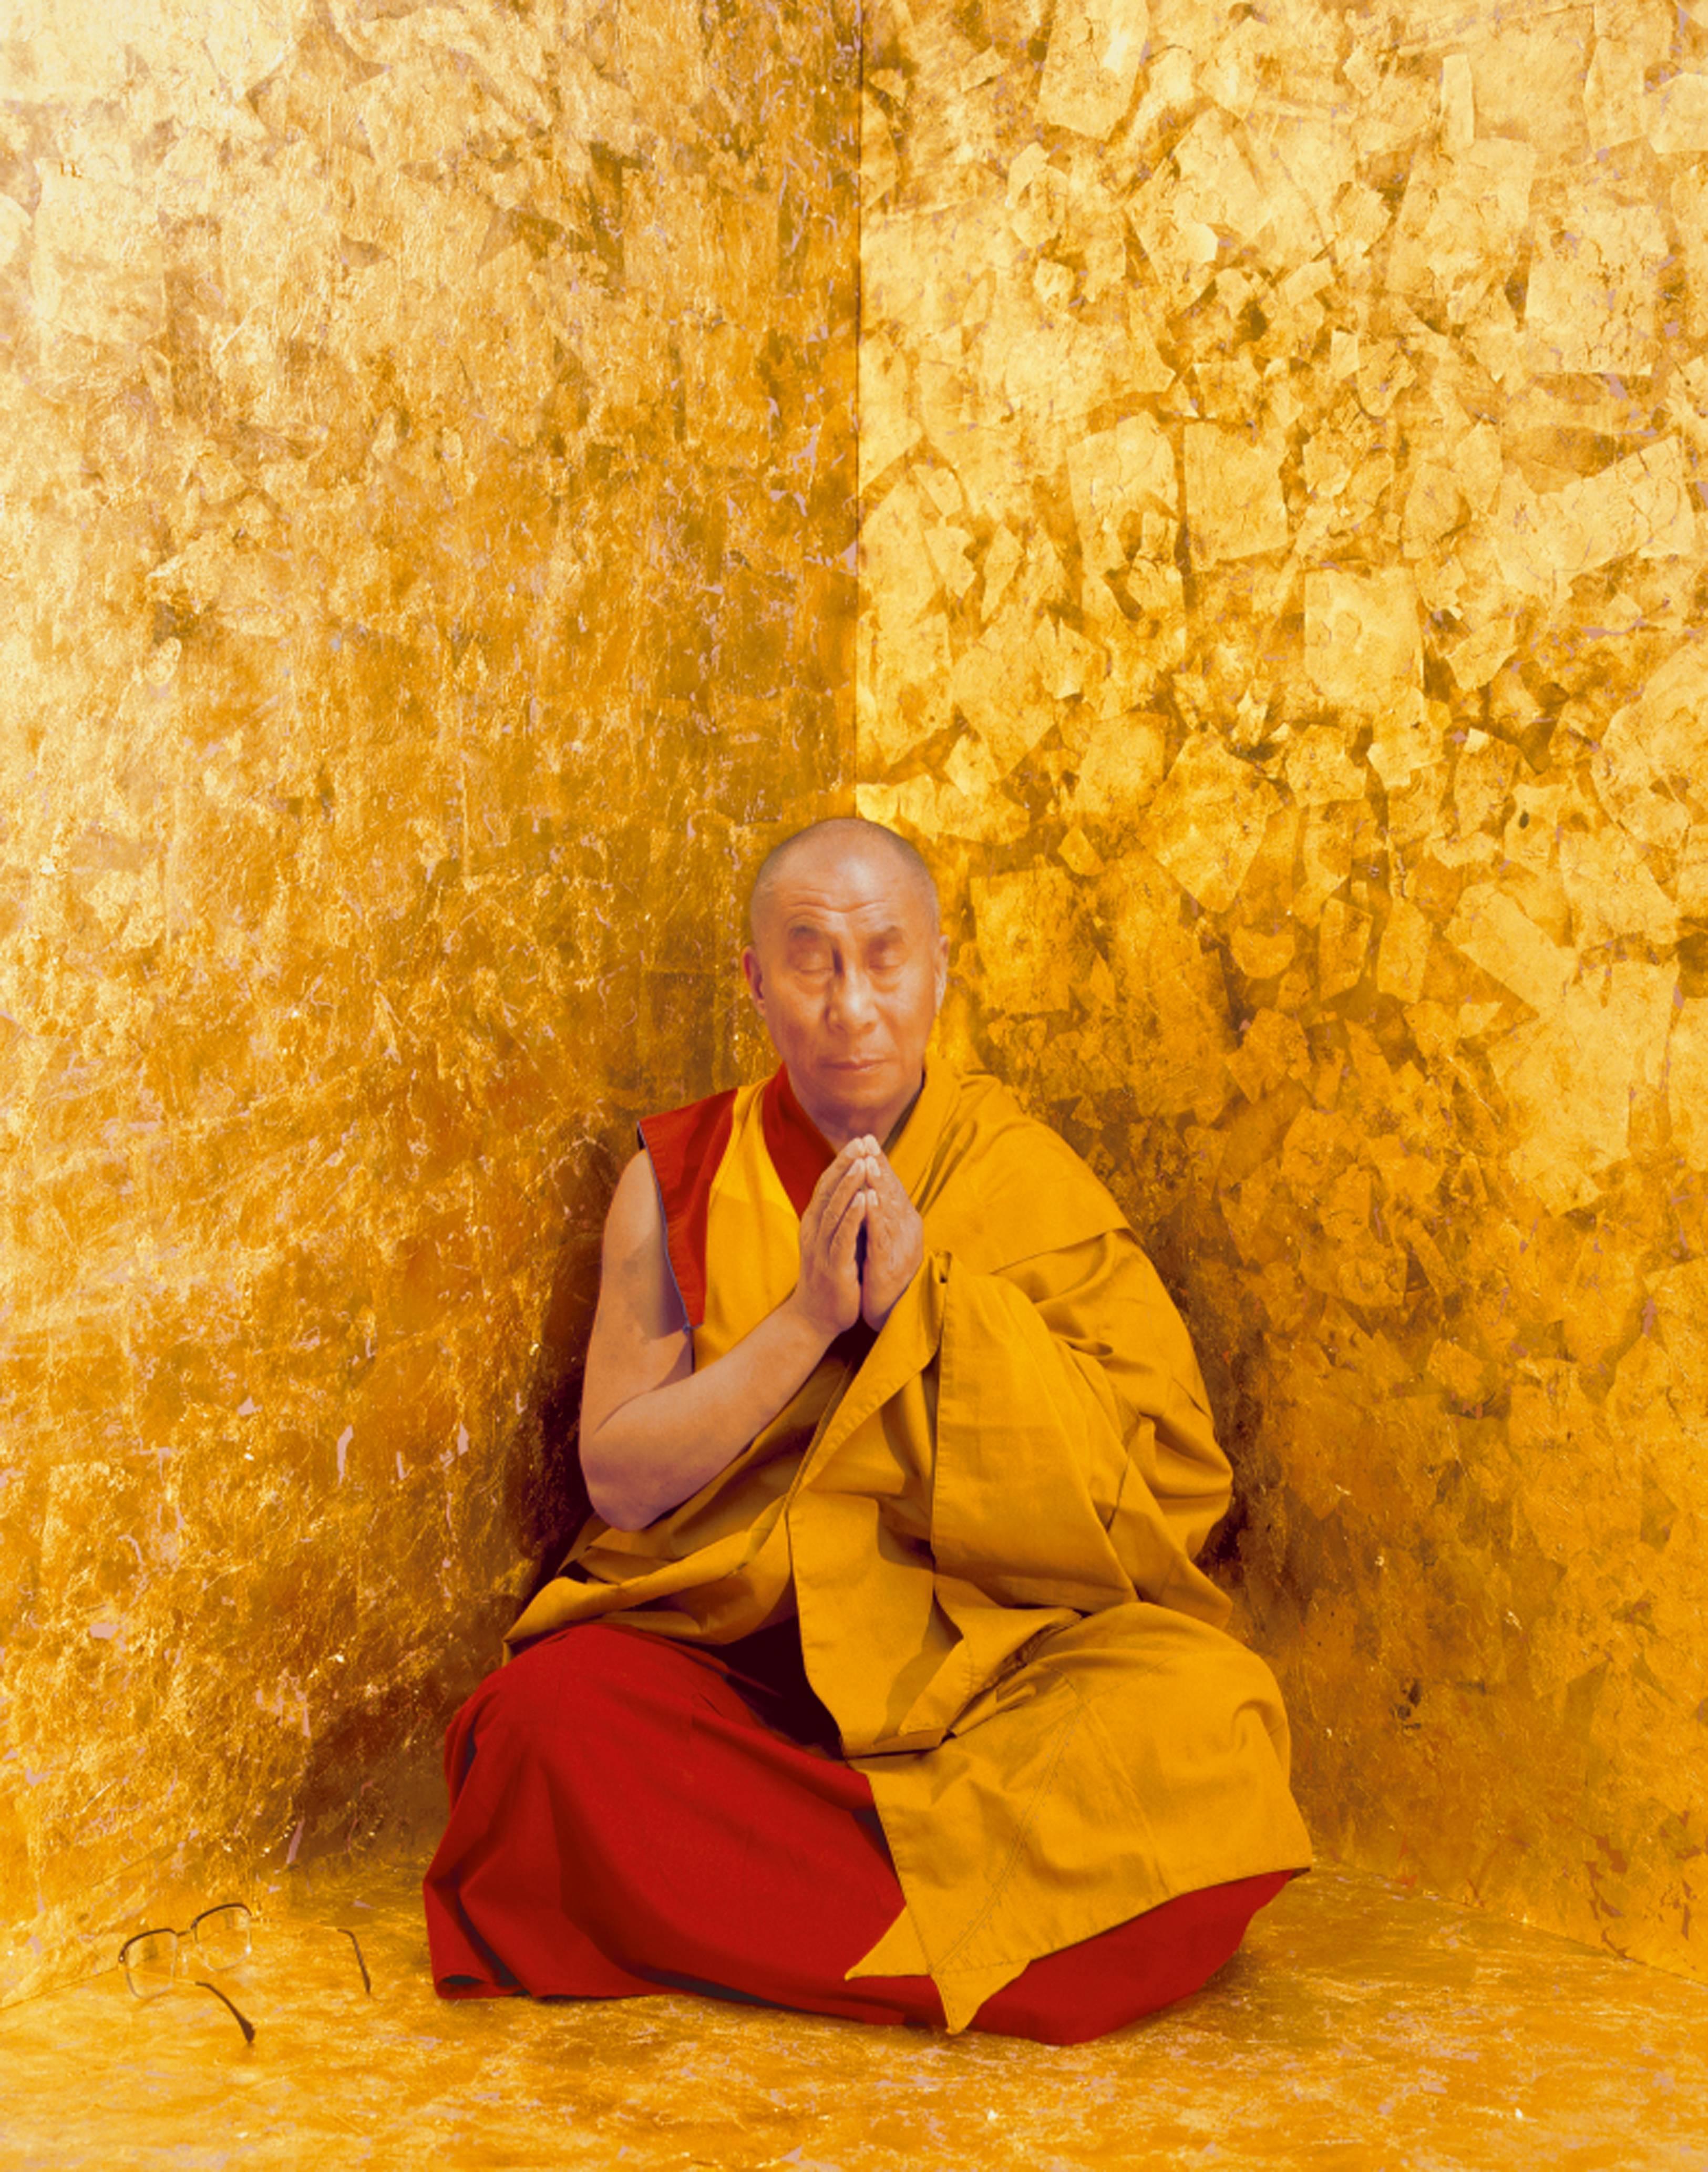 Michael O'Neill Portrait Photograph - Meditation - H.H. the 14th Dalai Lama